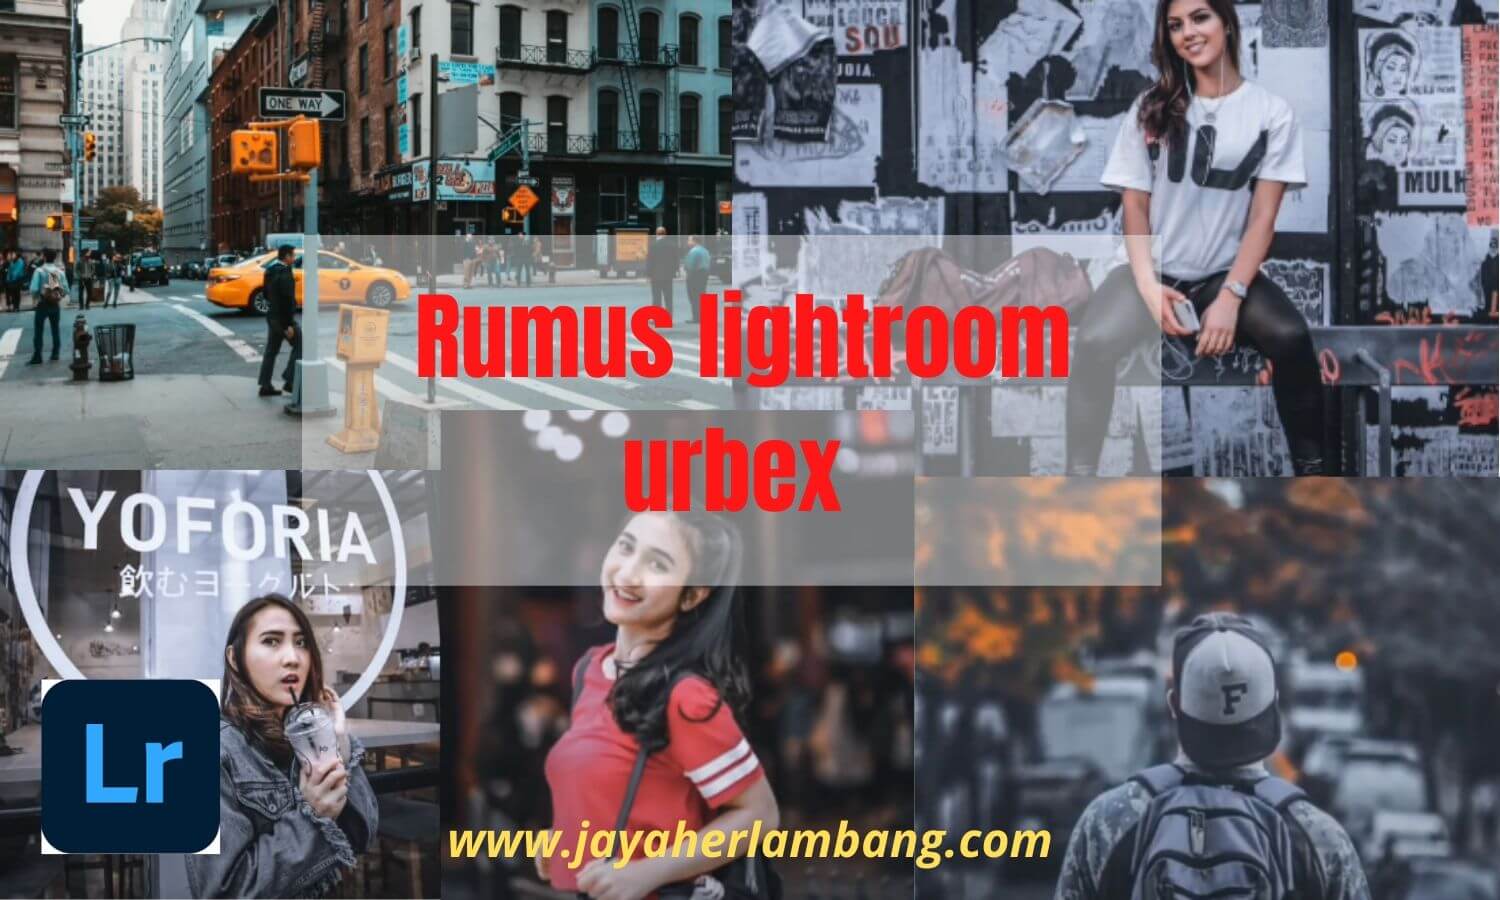 rumus lightroom urbex